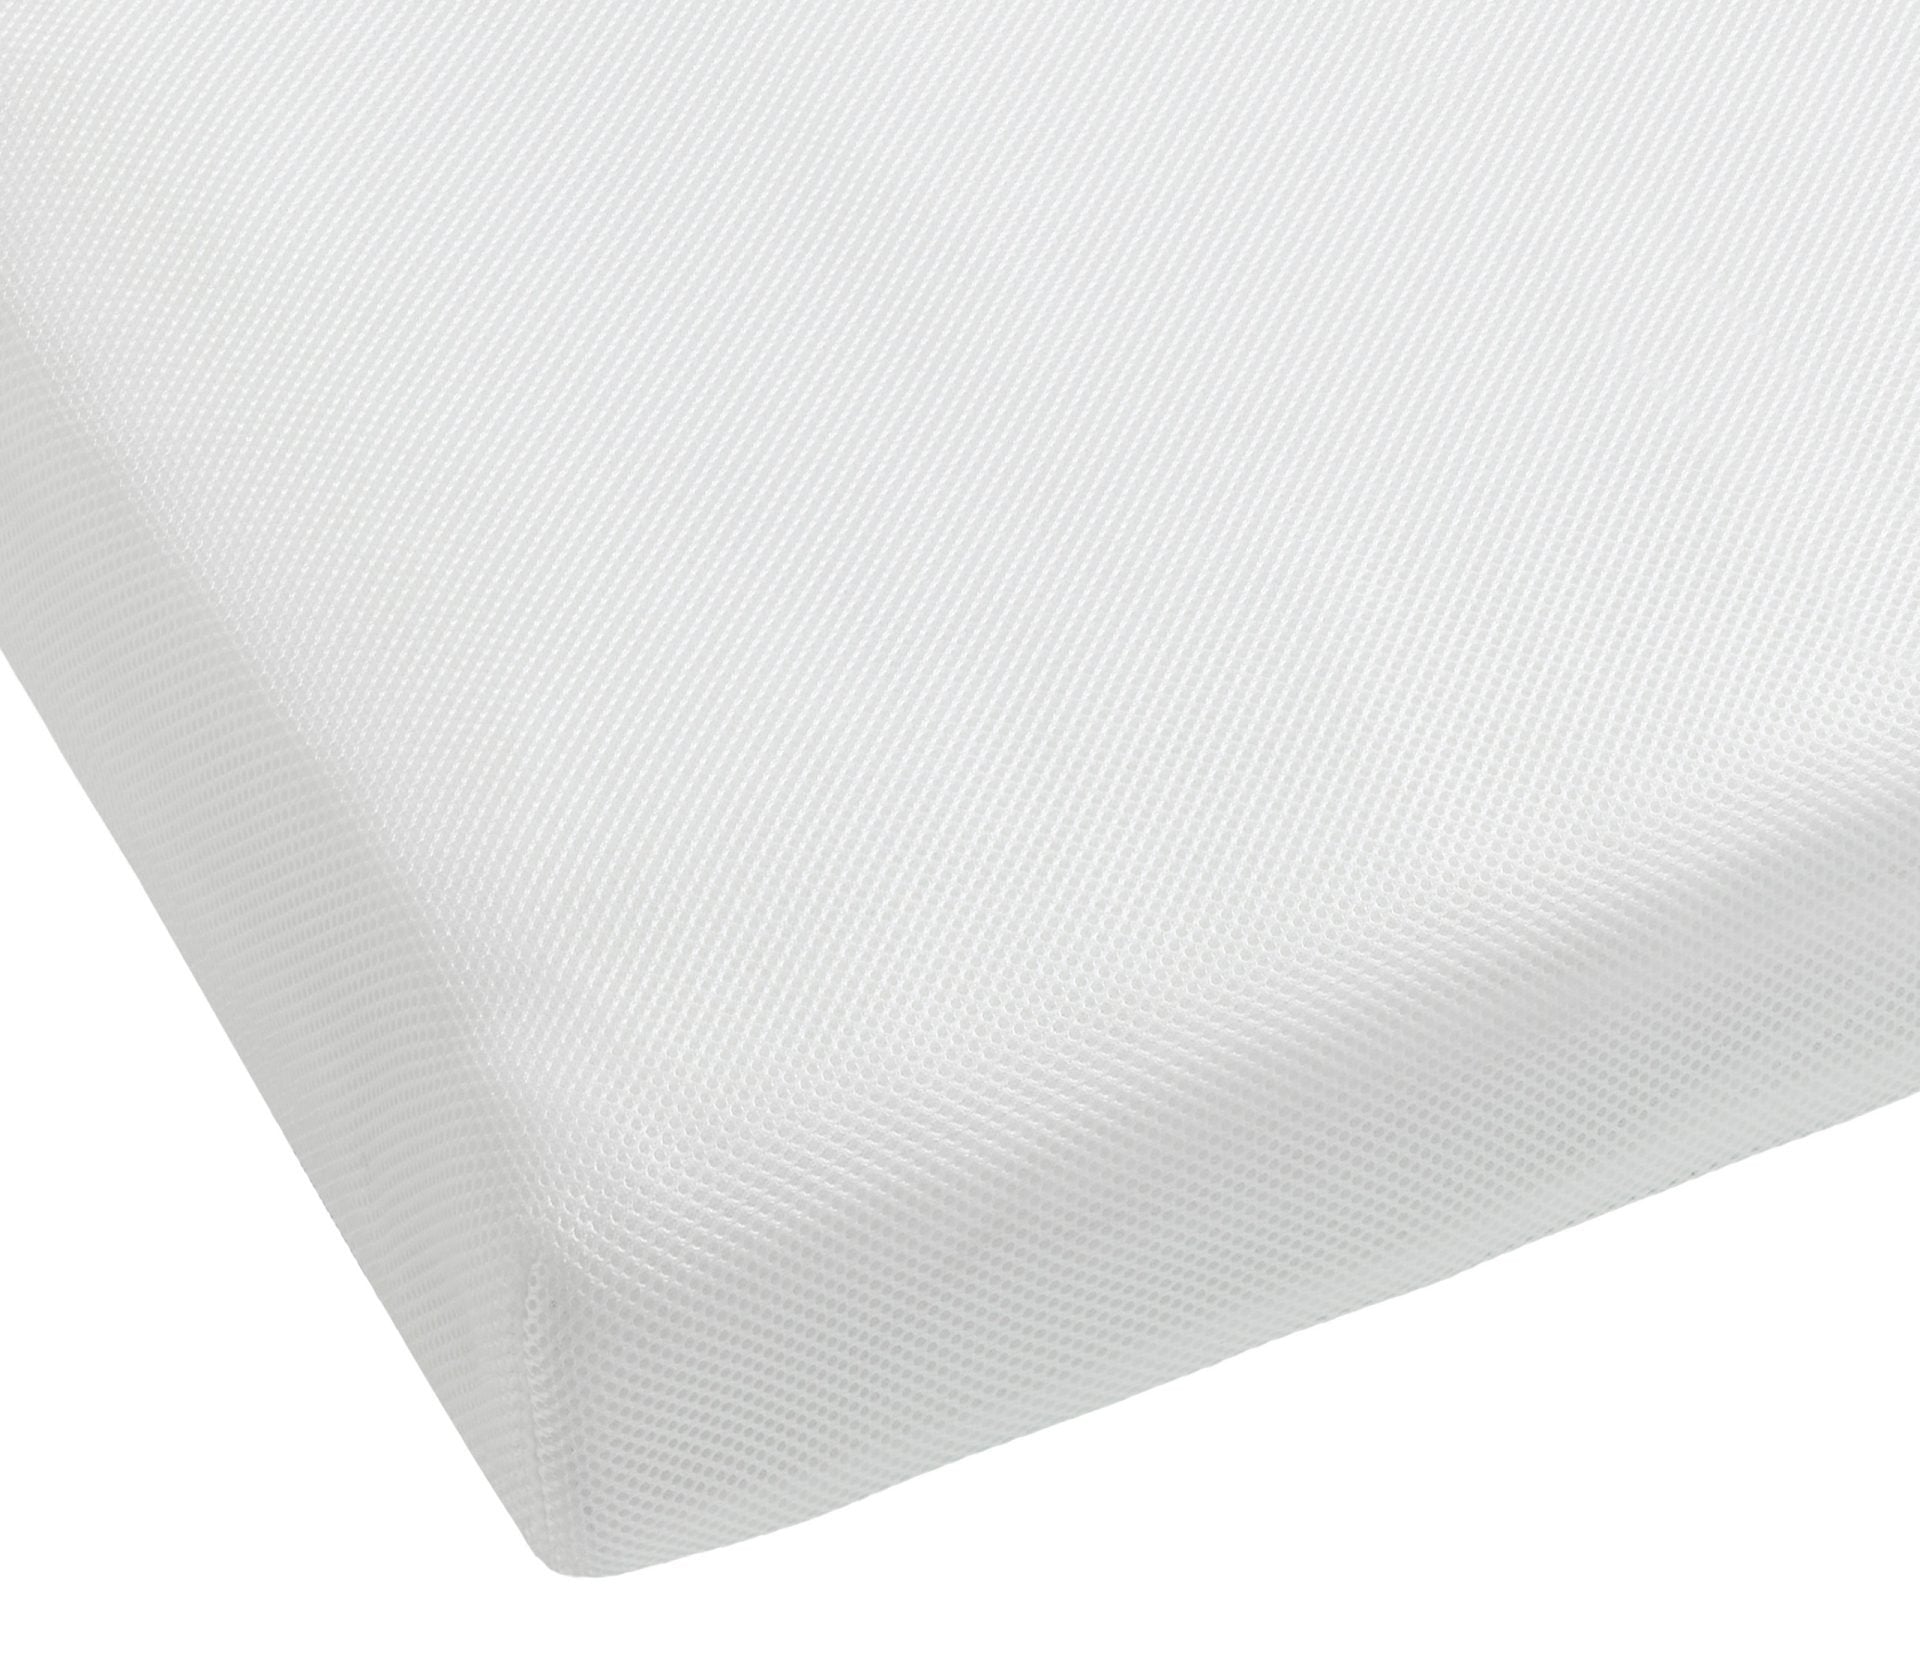 View Babymore Premium Core Pocket Sprung Cot Bed Mattress 120 x 60 x 10 CM information